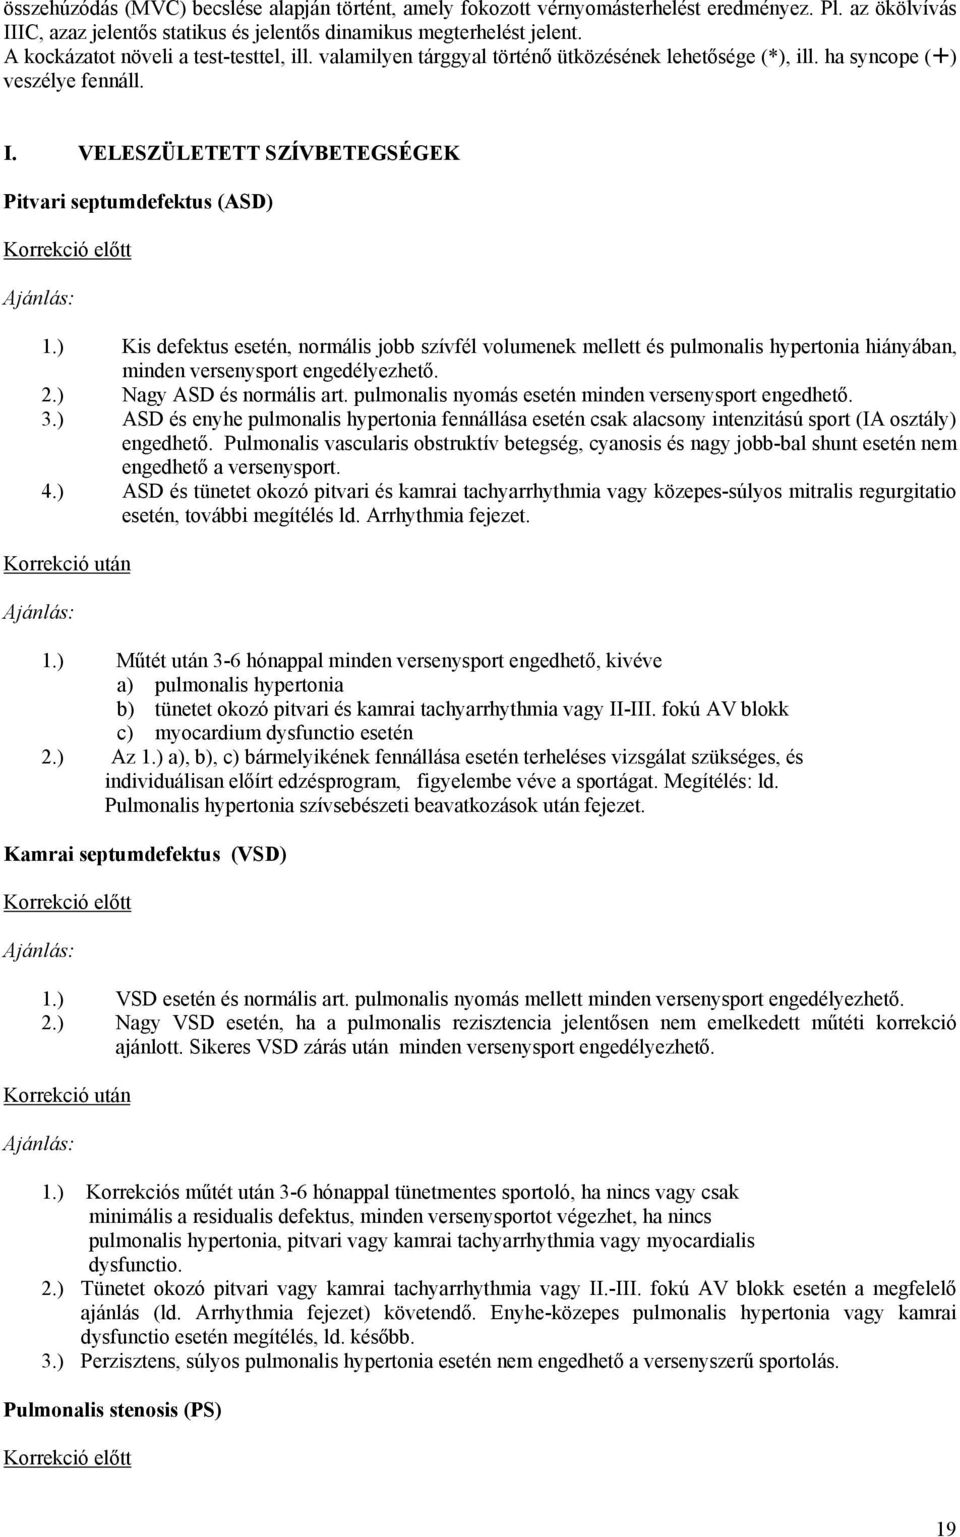 Hipertónia Archívum - Page 10 of 11 - Dr. Barna István